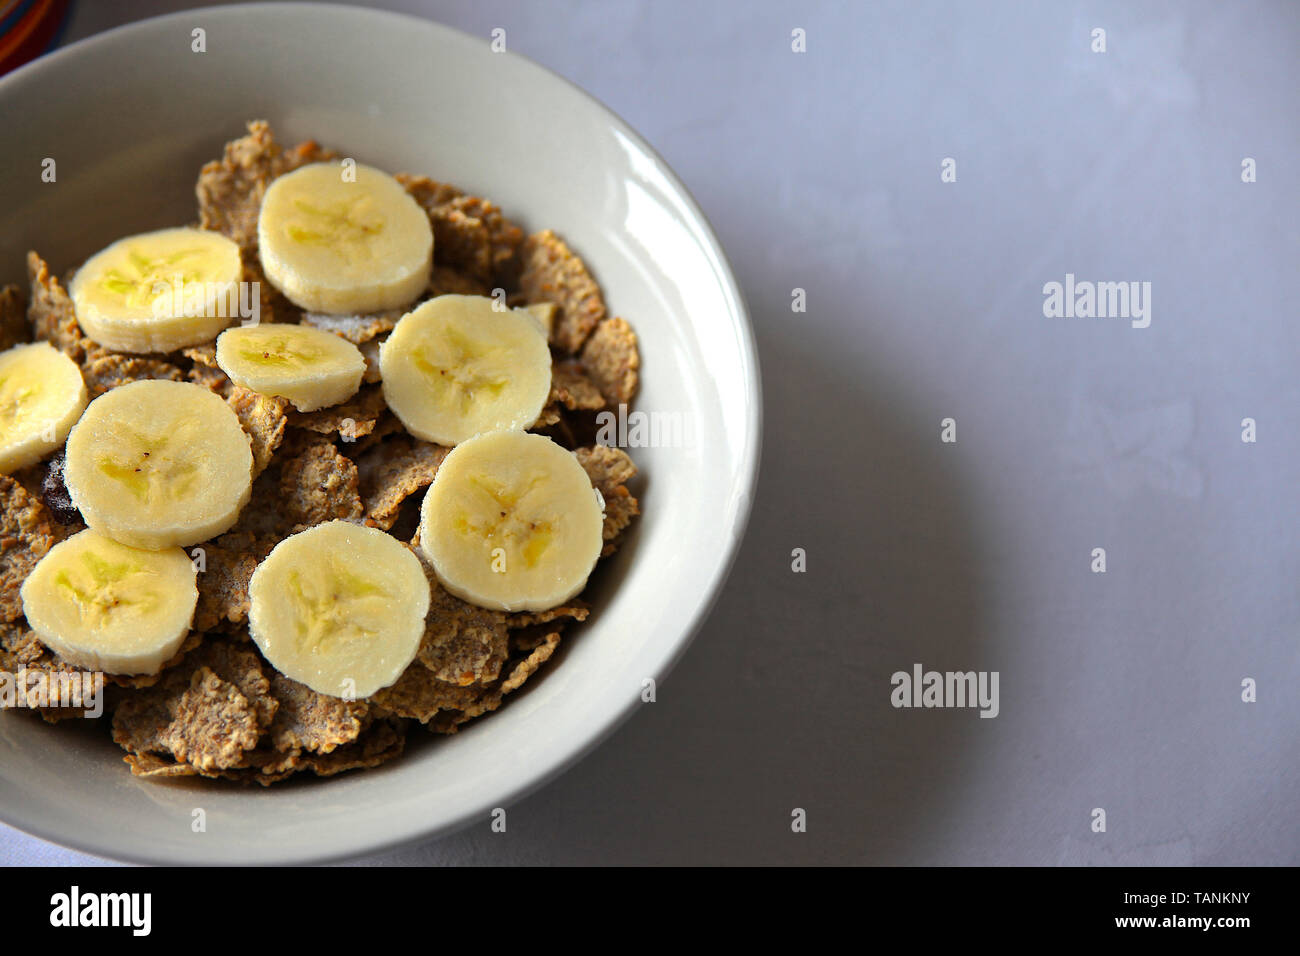 Close up healthy breakfast of bran flakes and banana. Stock Photo